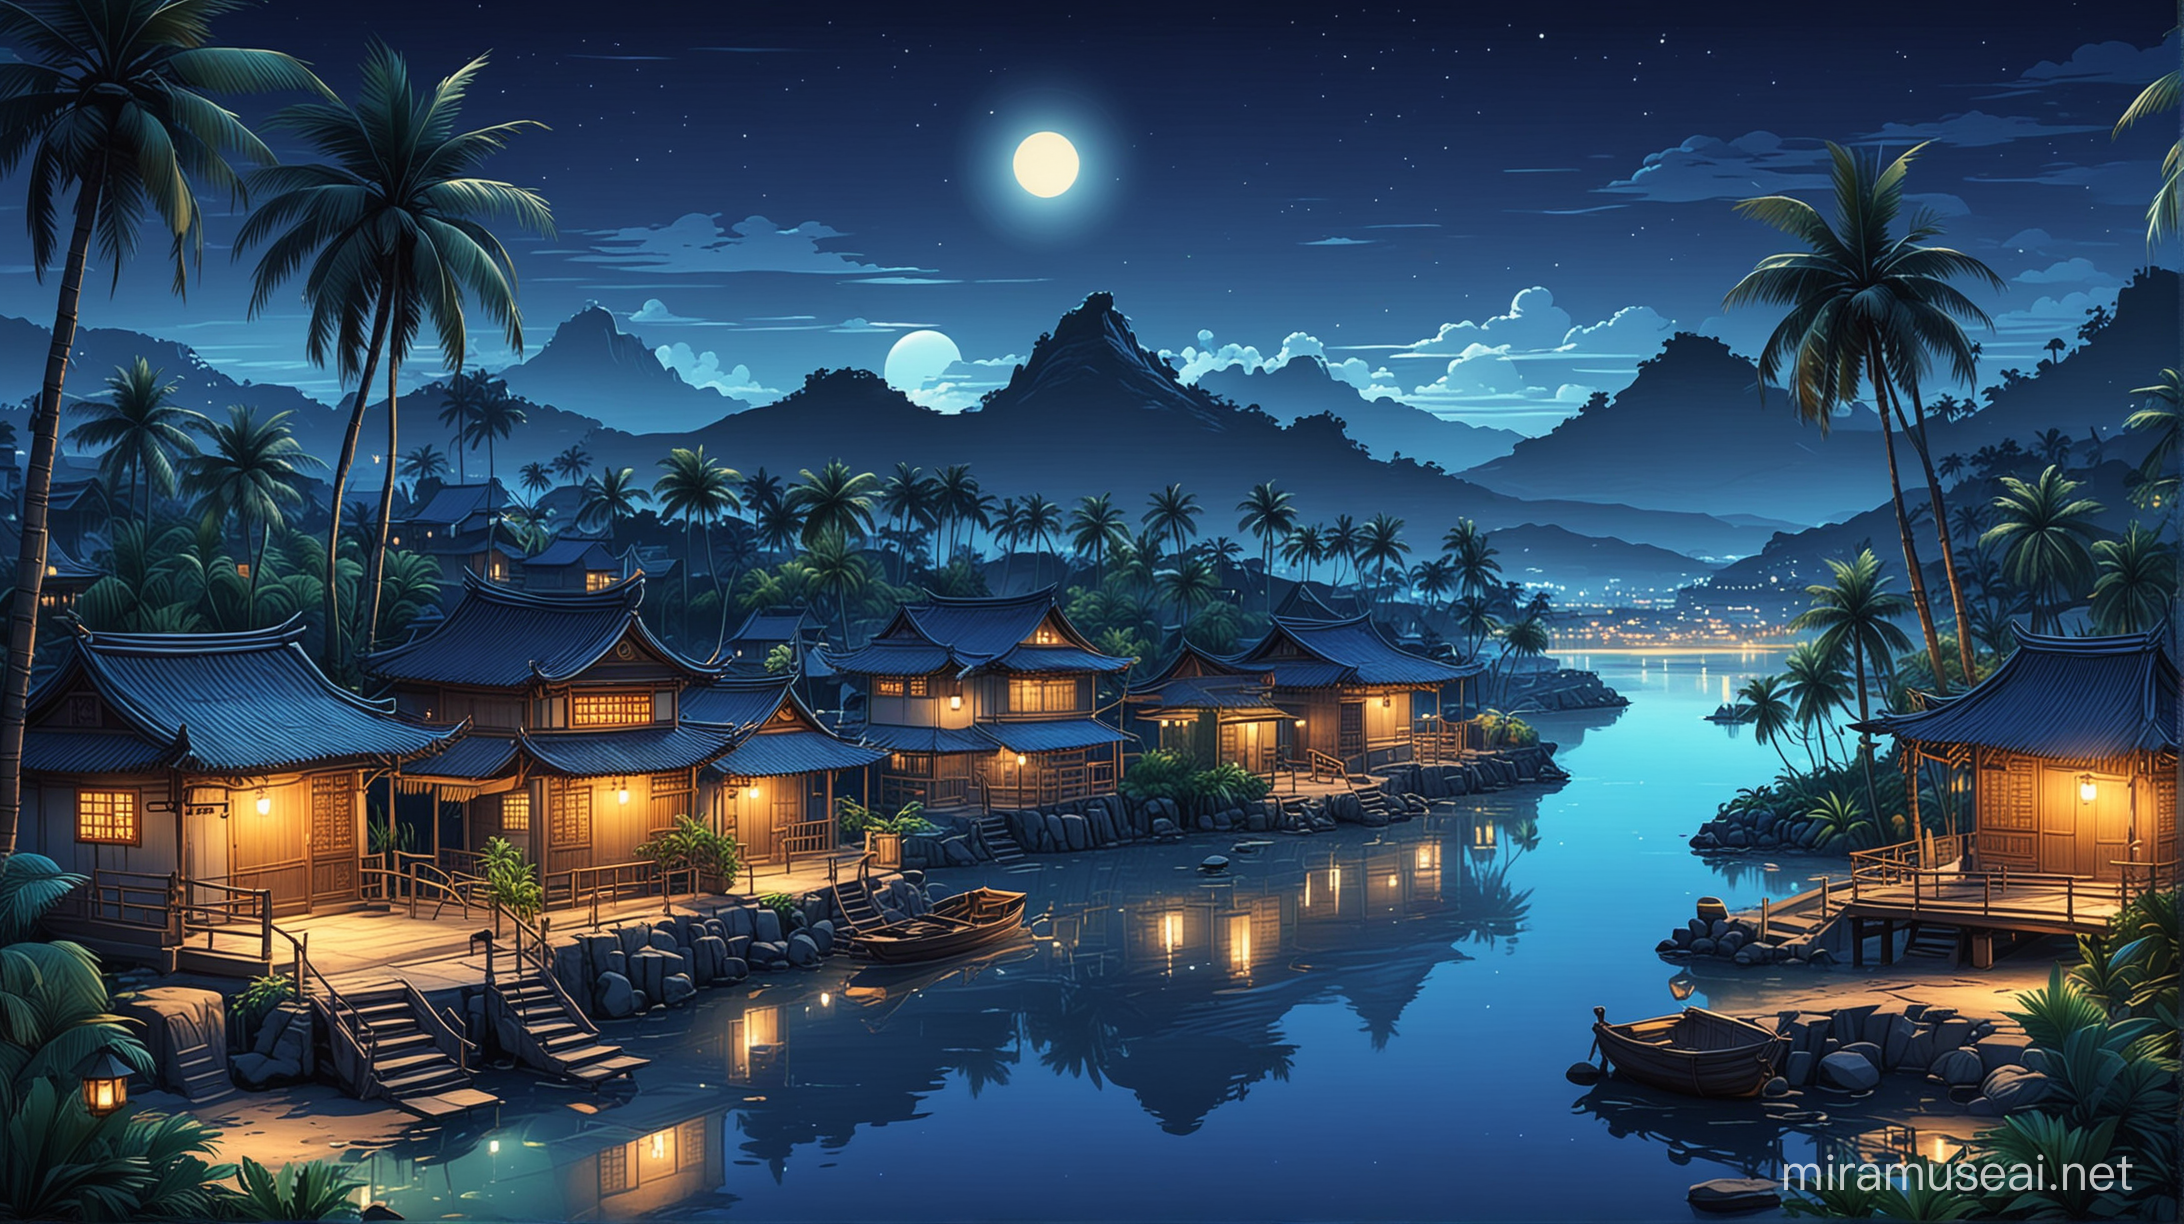 Cartoon Asian Village Night Scene with Palm Trees